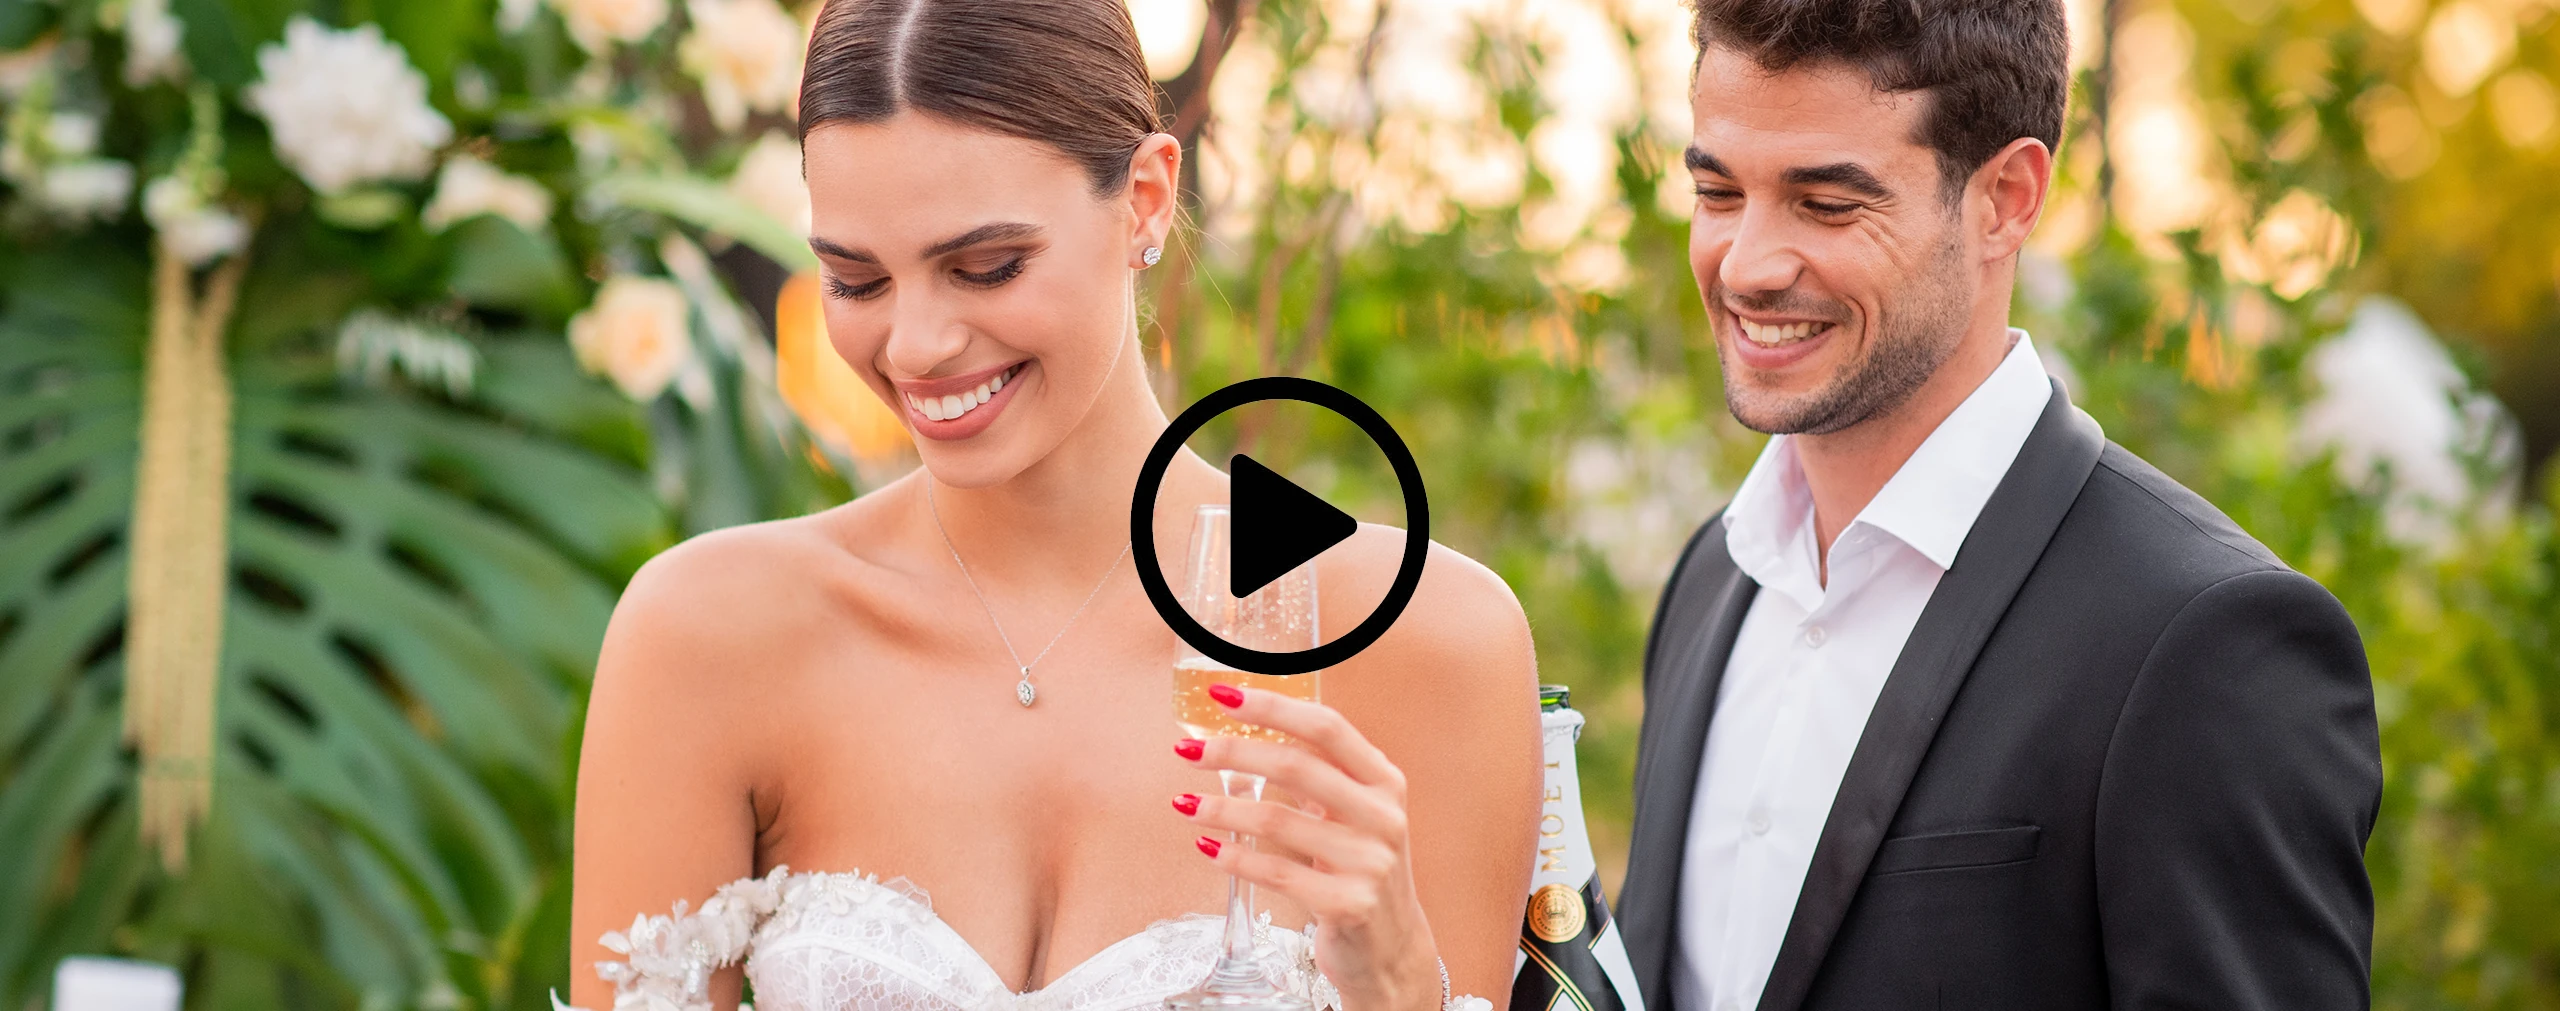 WedReviews - צילום וידאו , צלם וידאו לחתונה - המלצות